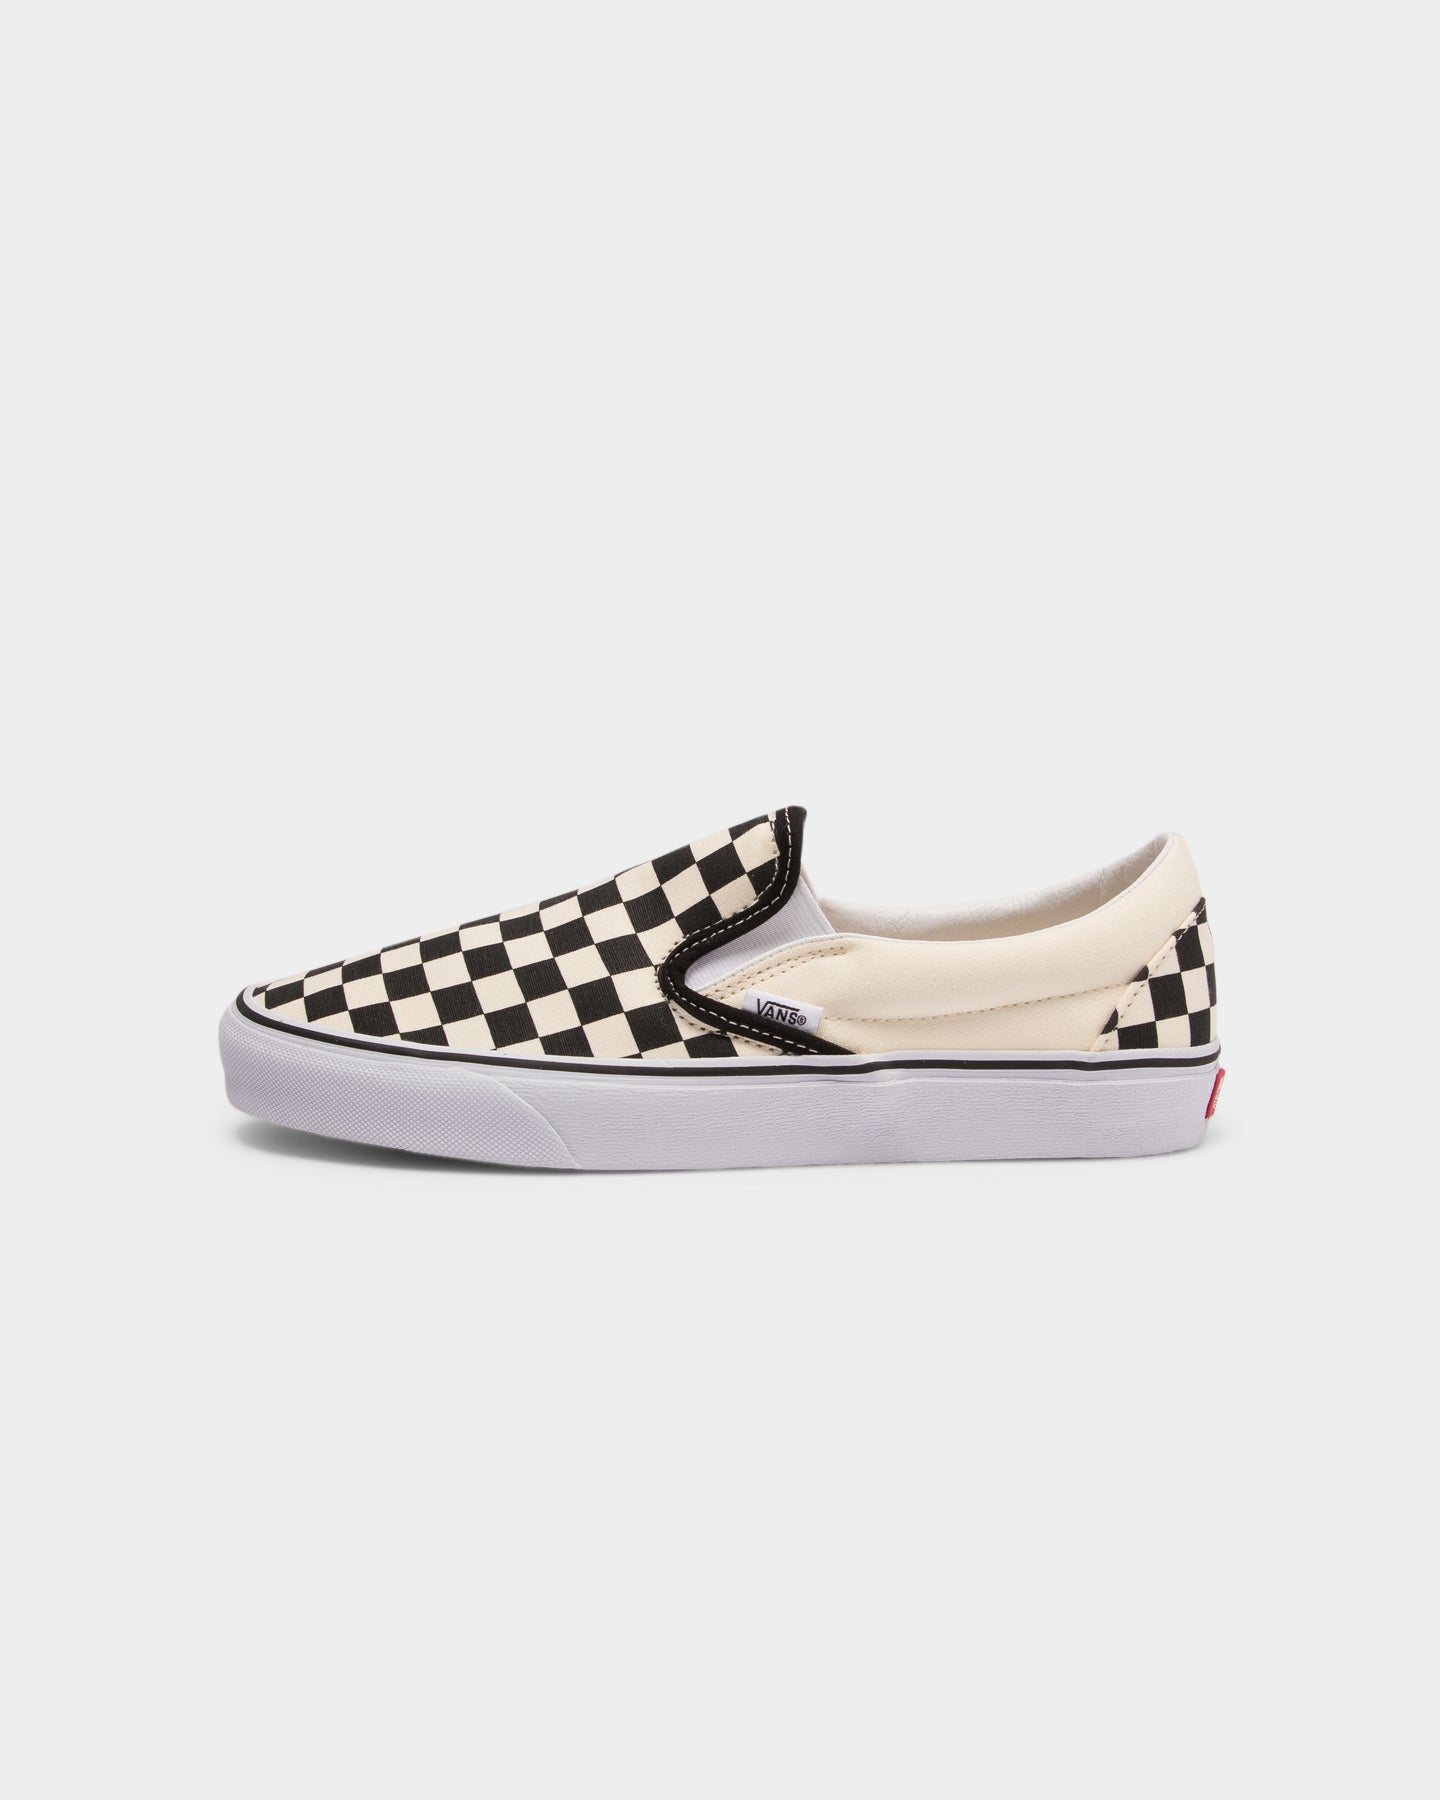 vans checkerboard shoes black white